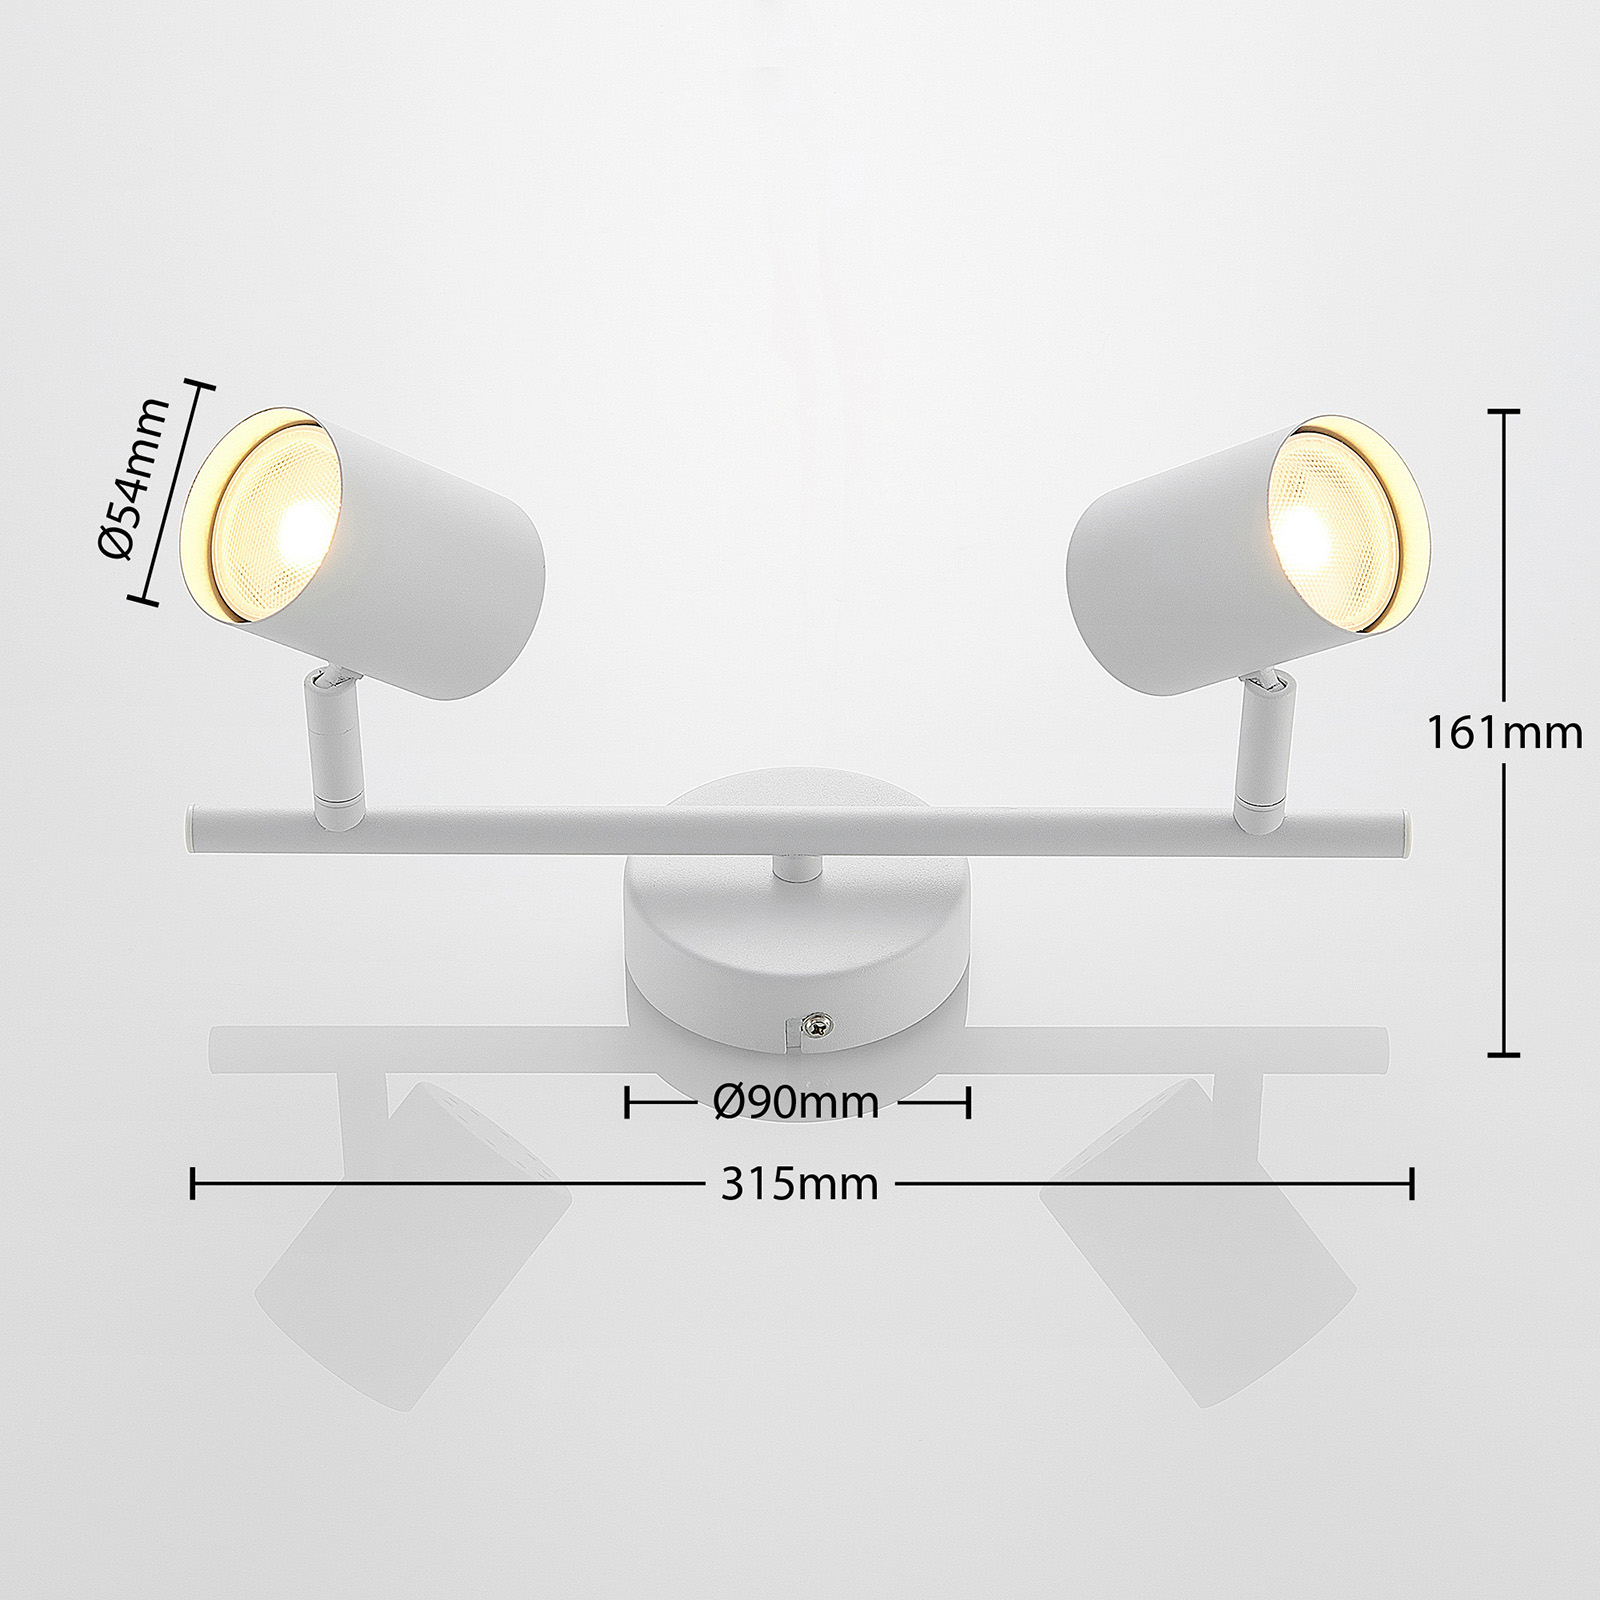 ELC Tomoki taklampe, hvit, 2 lyskilder